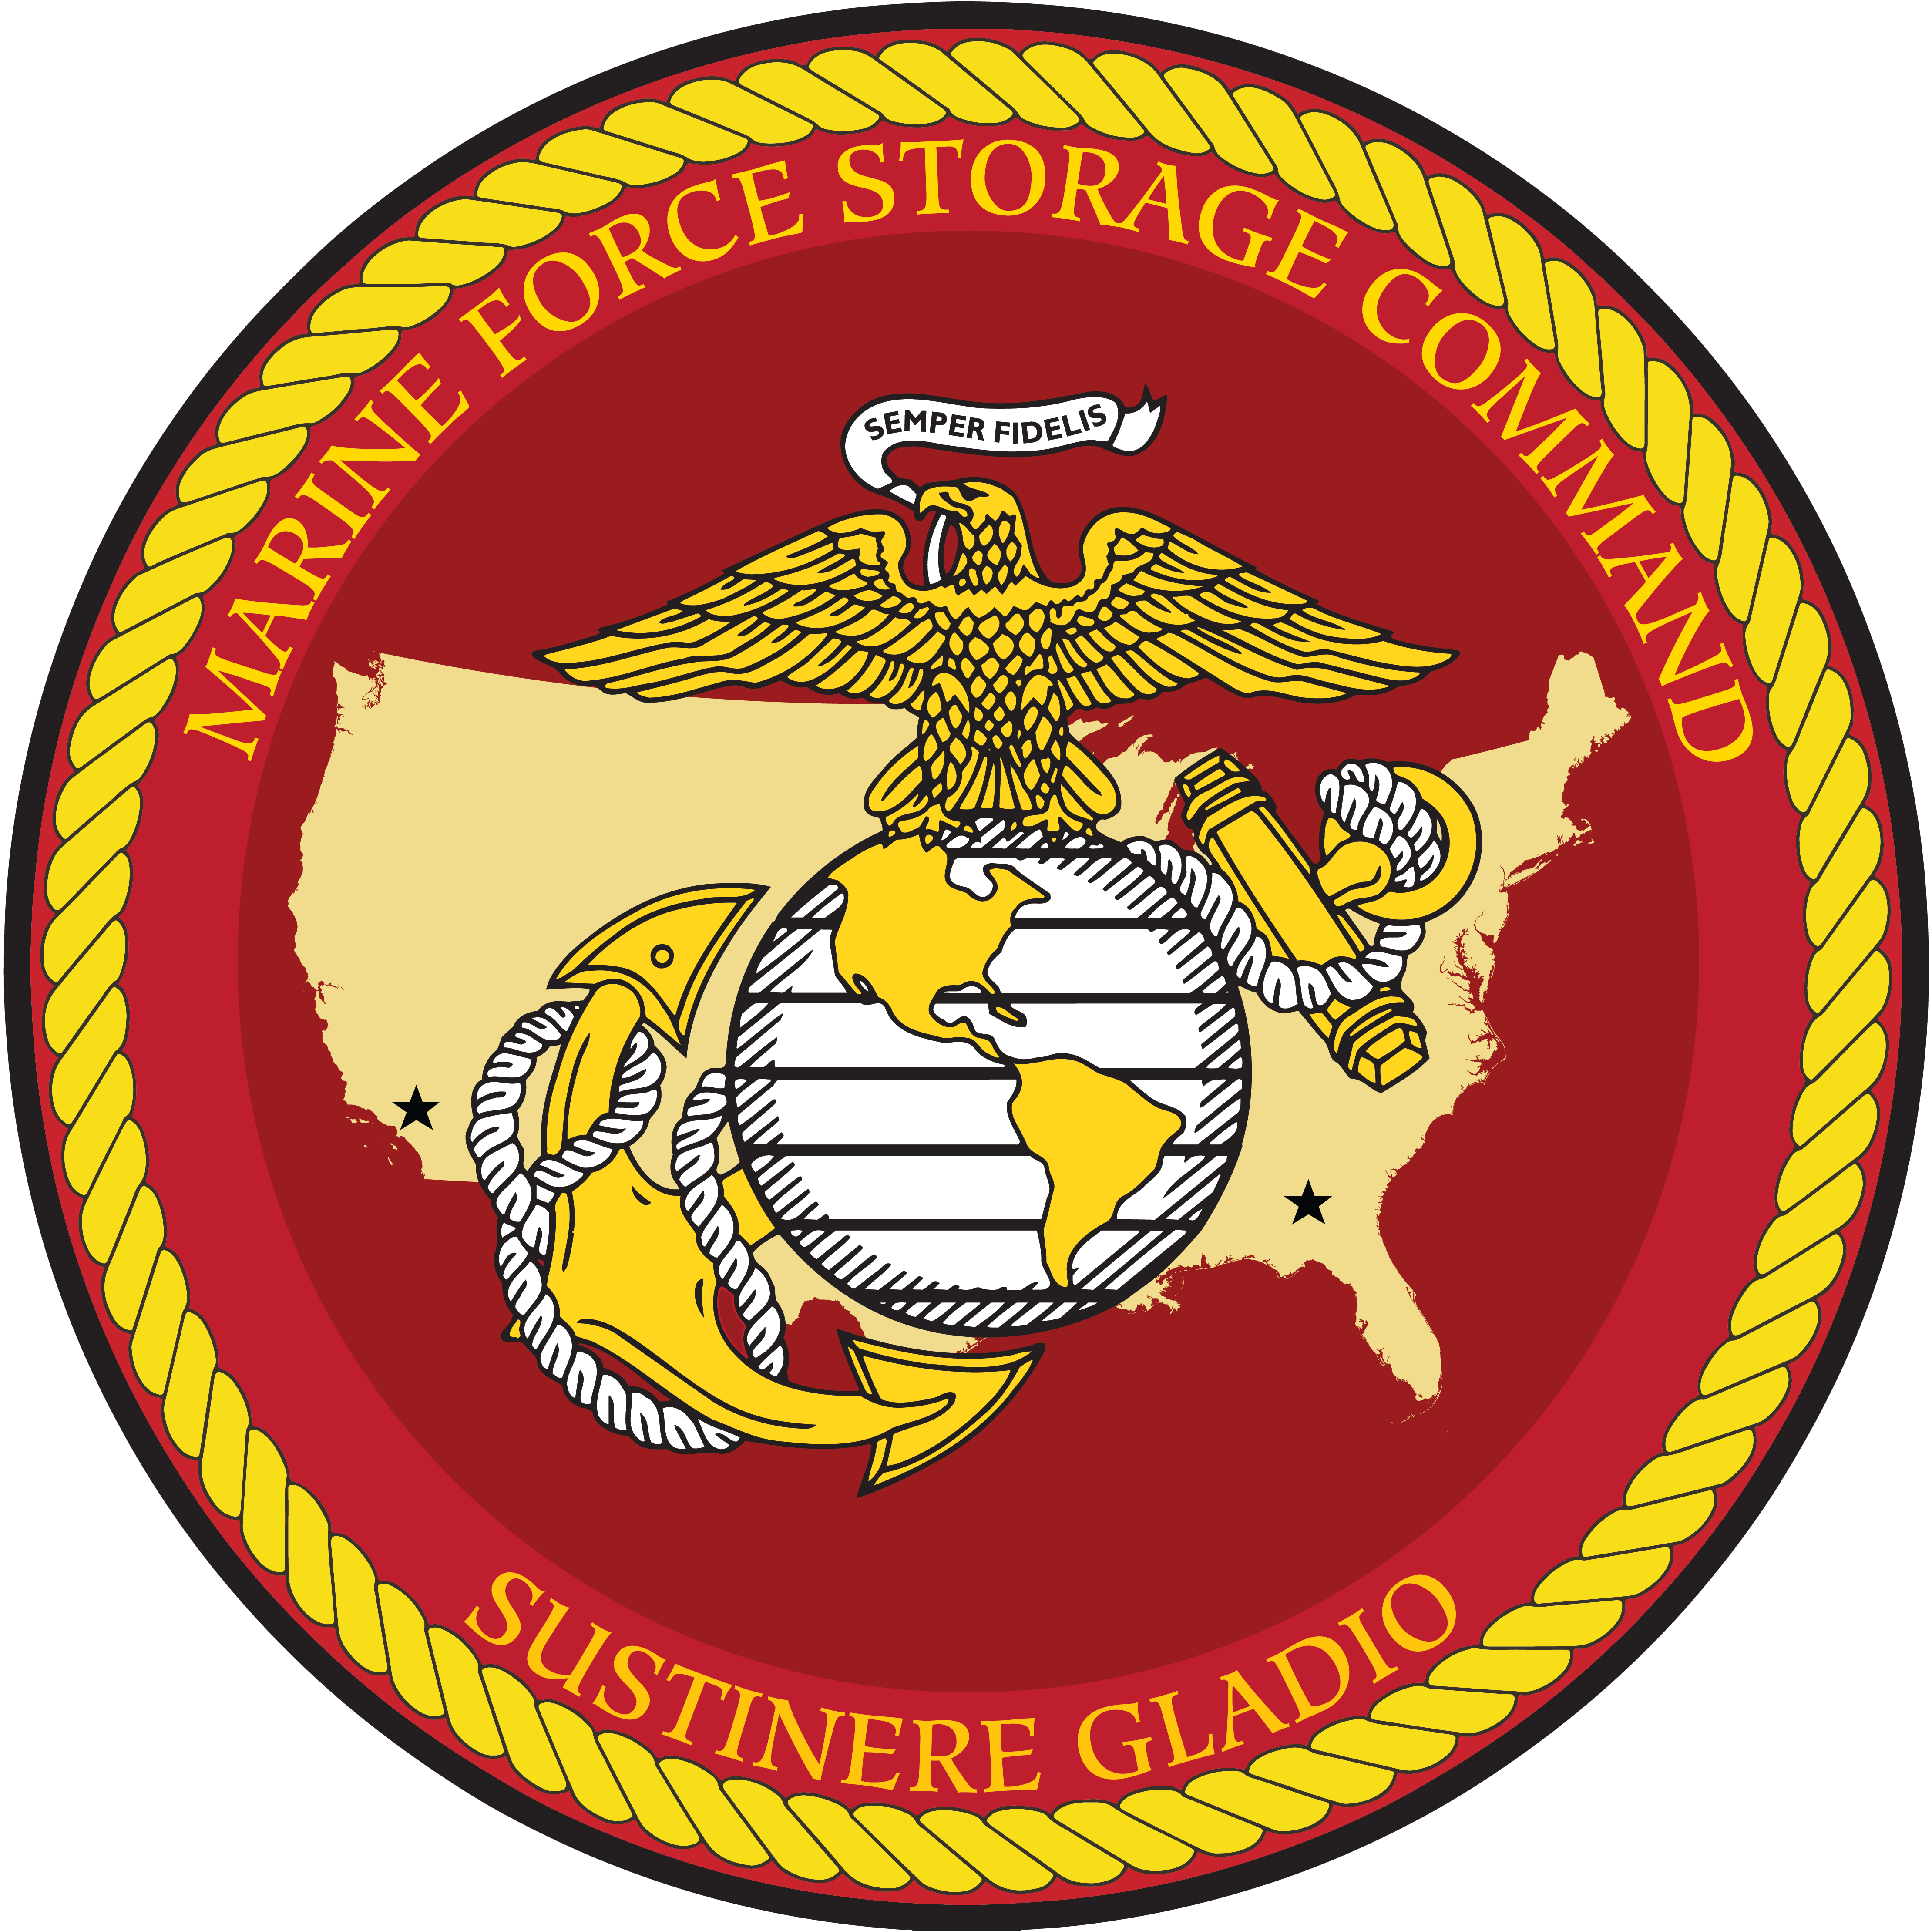 Marine Force Storage Command